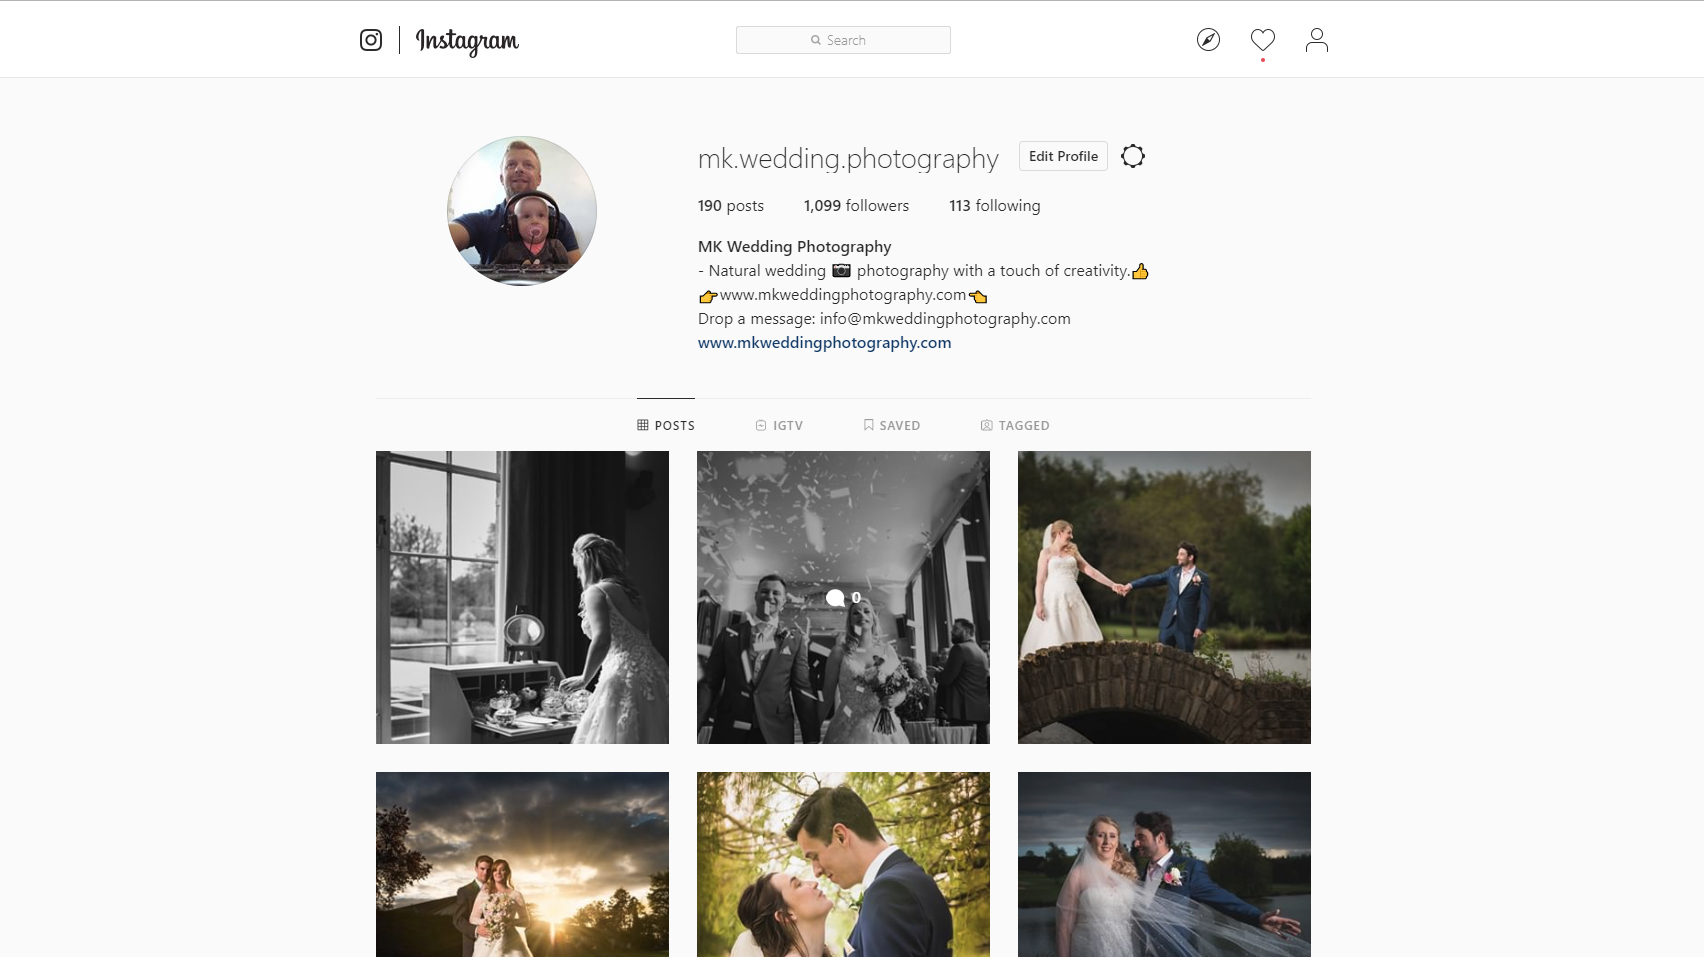 mk wedding photography on Instagram